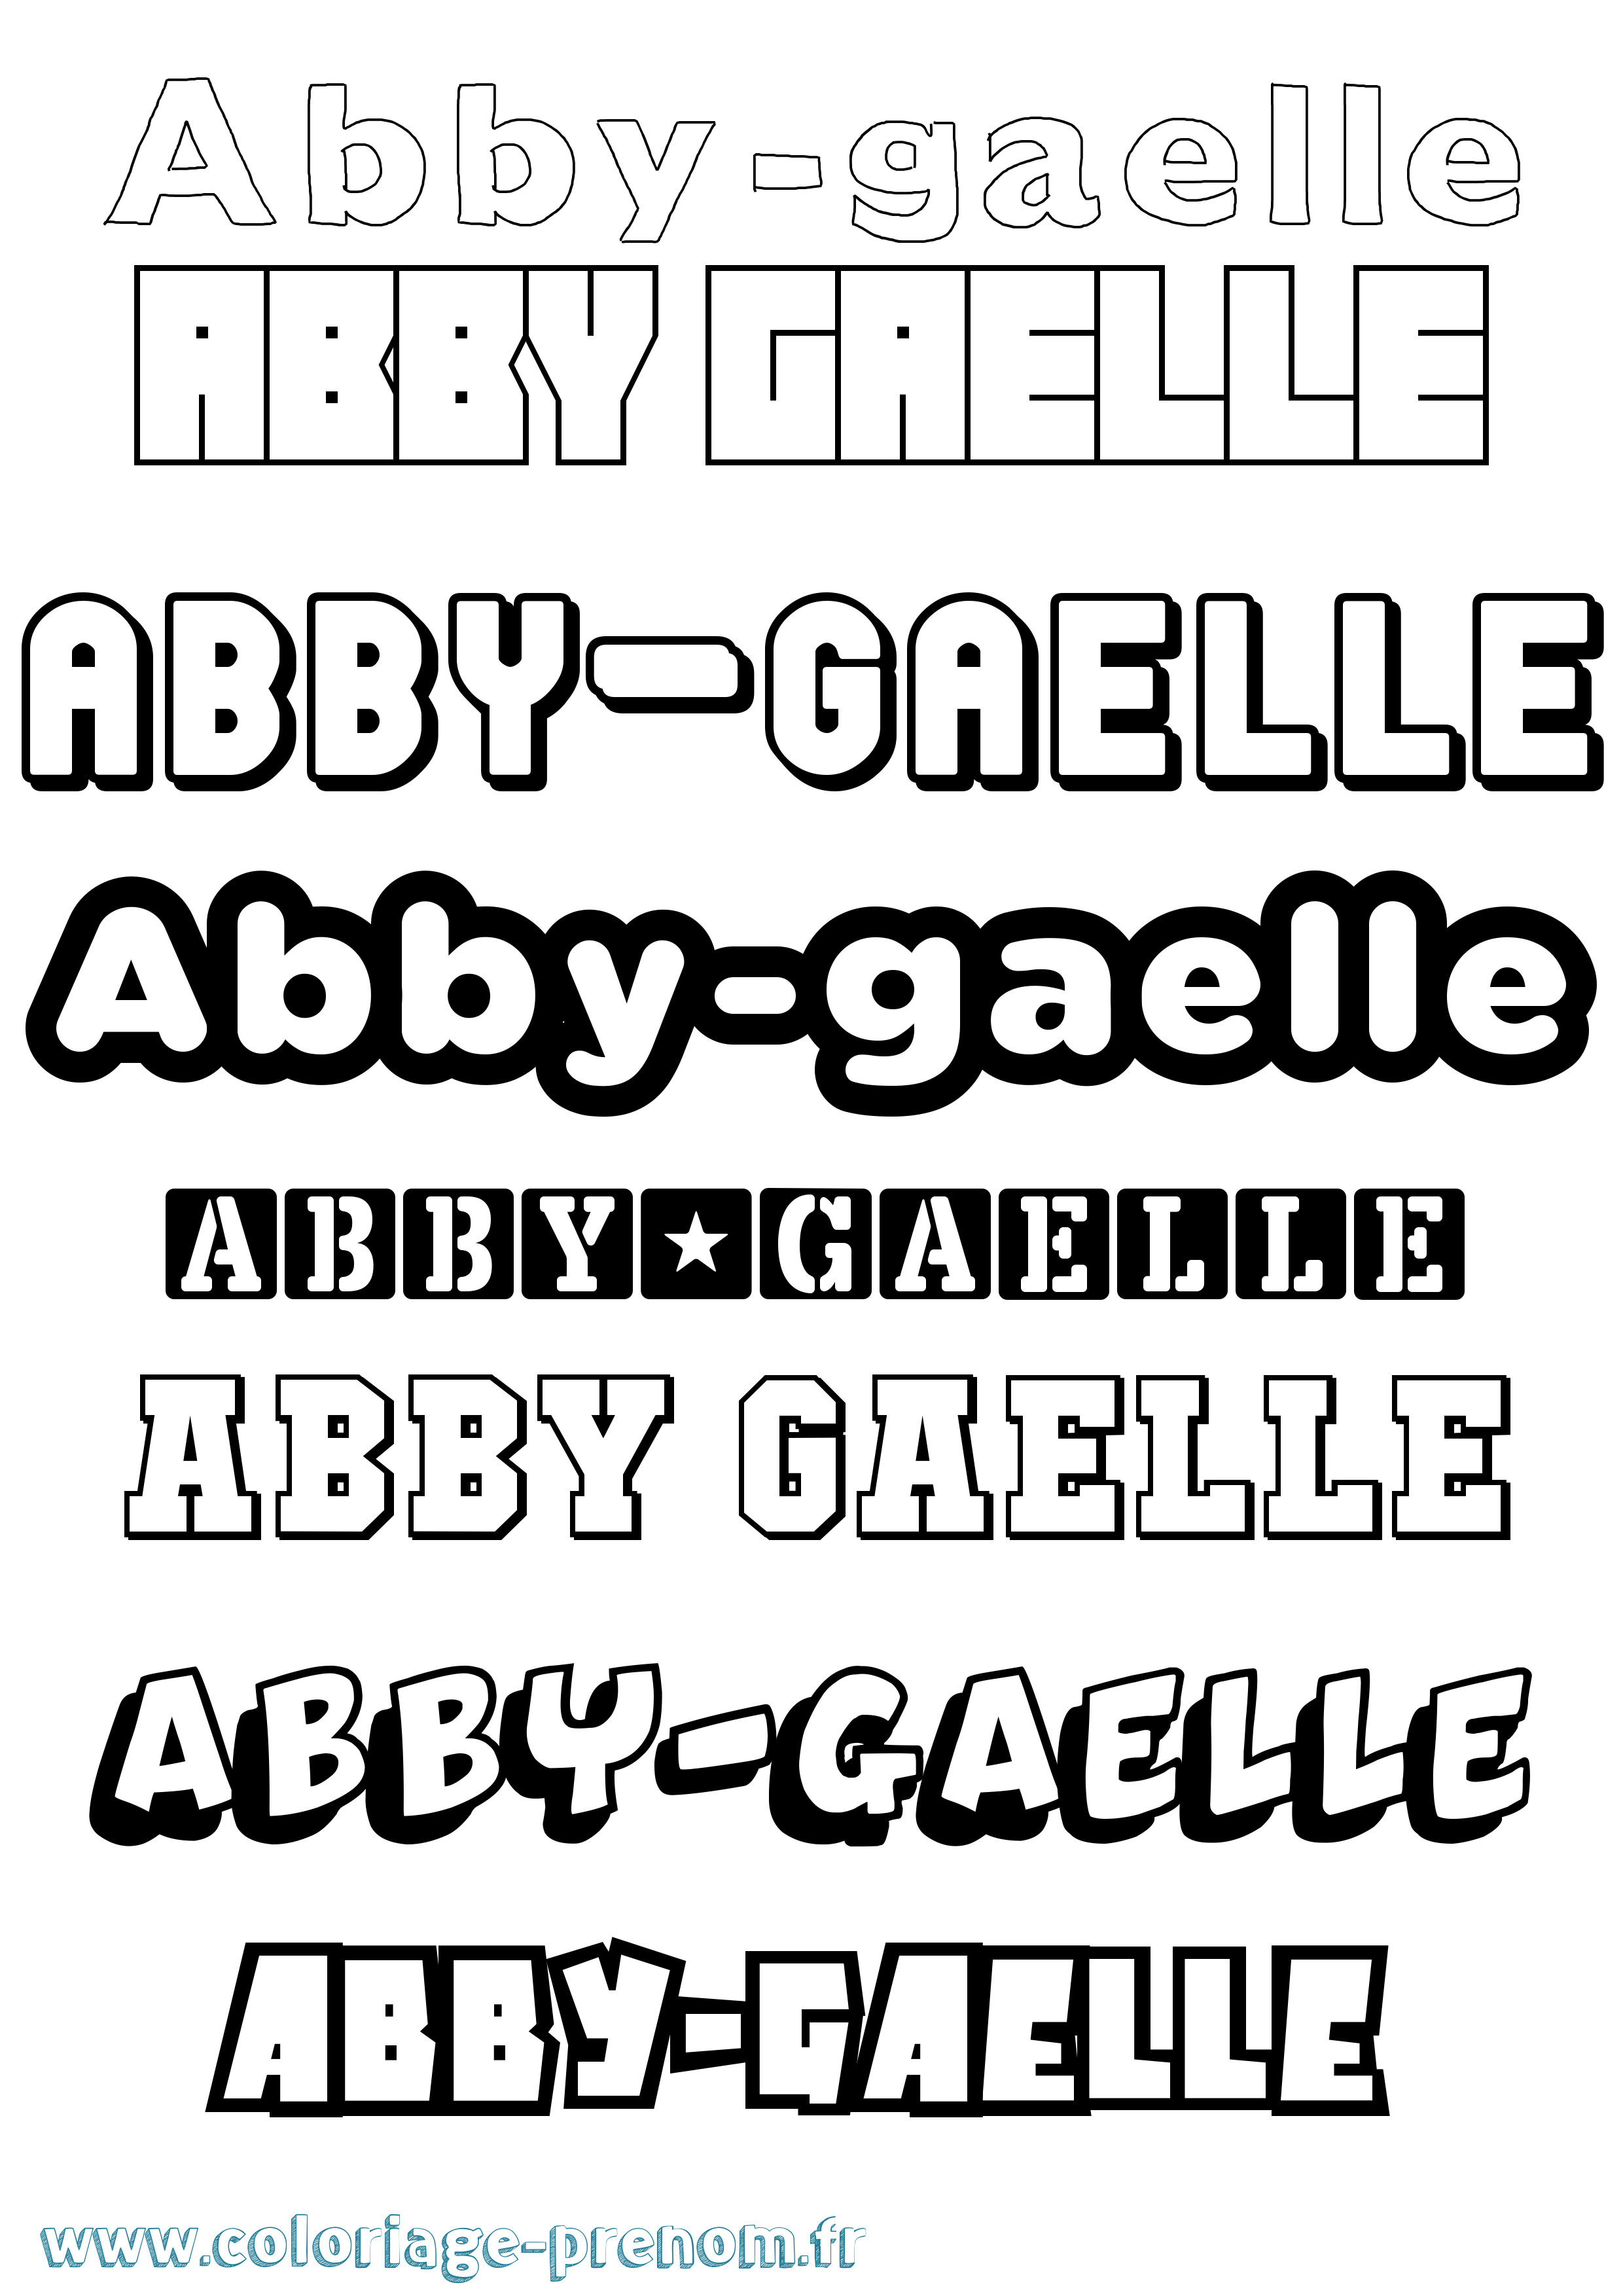 Coloriage prénom Abby-Gaelle Simple